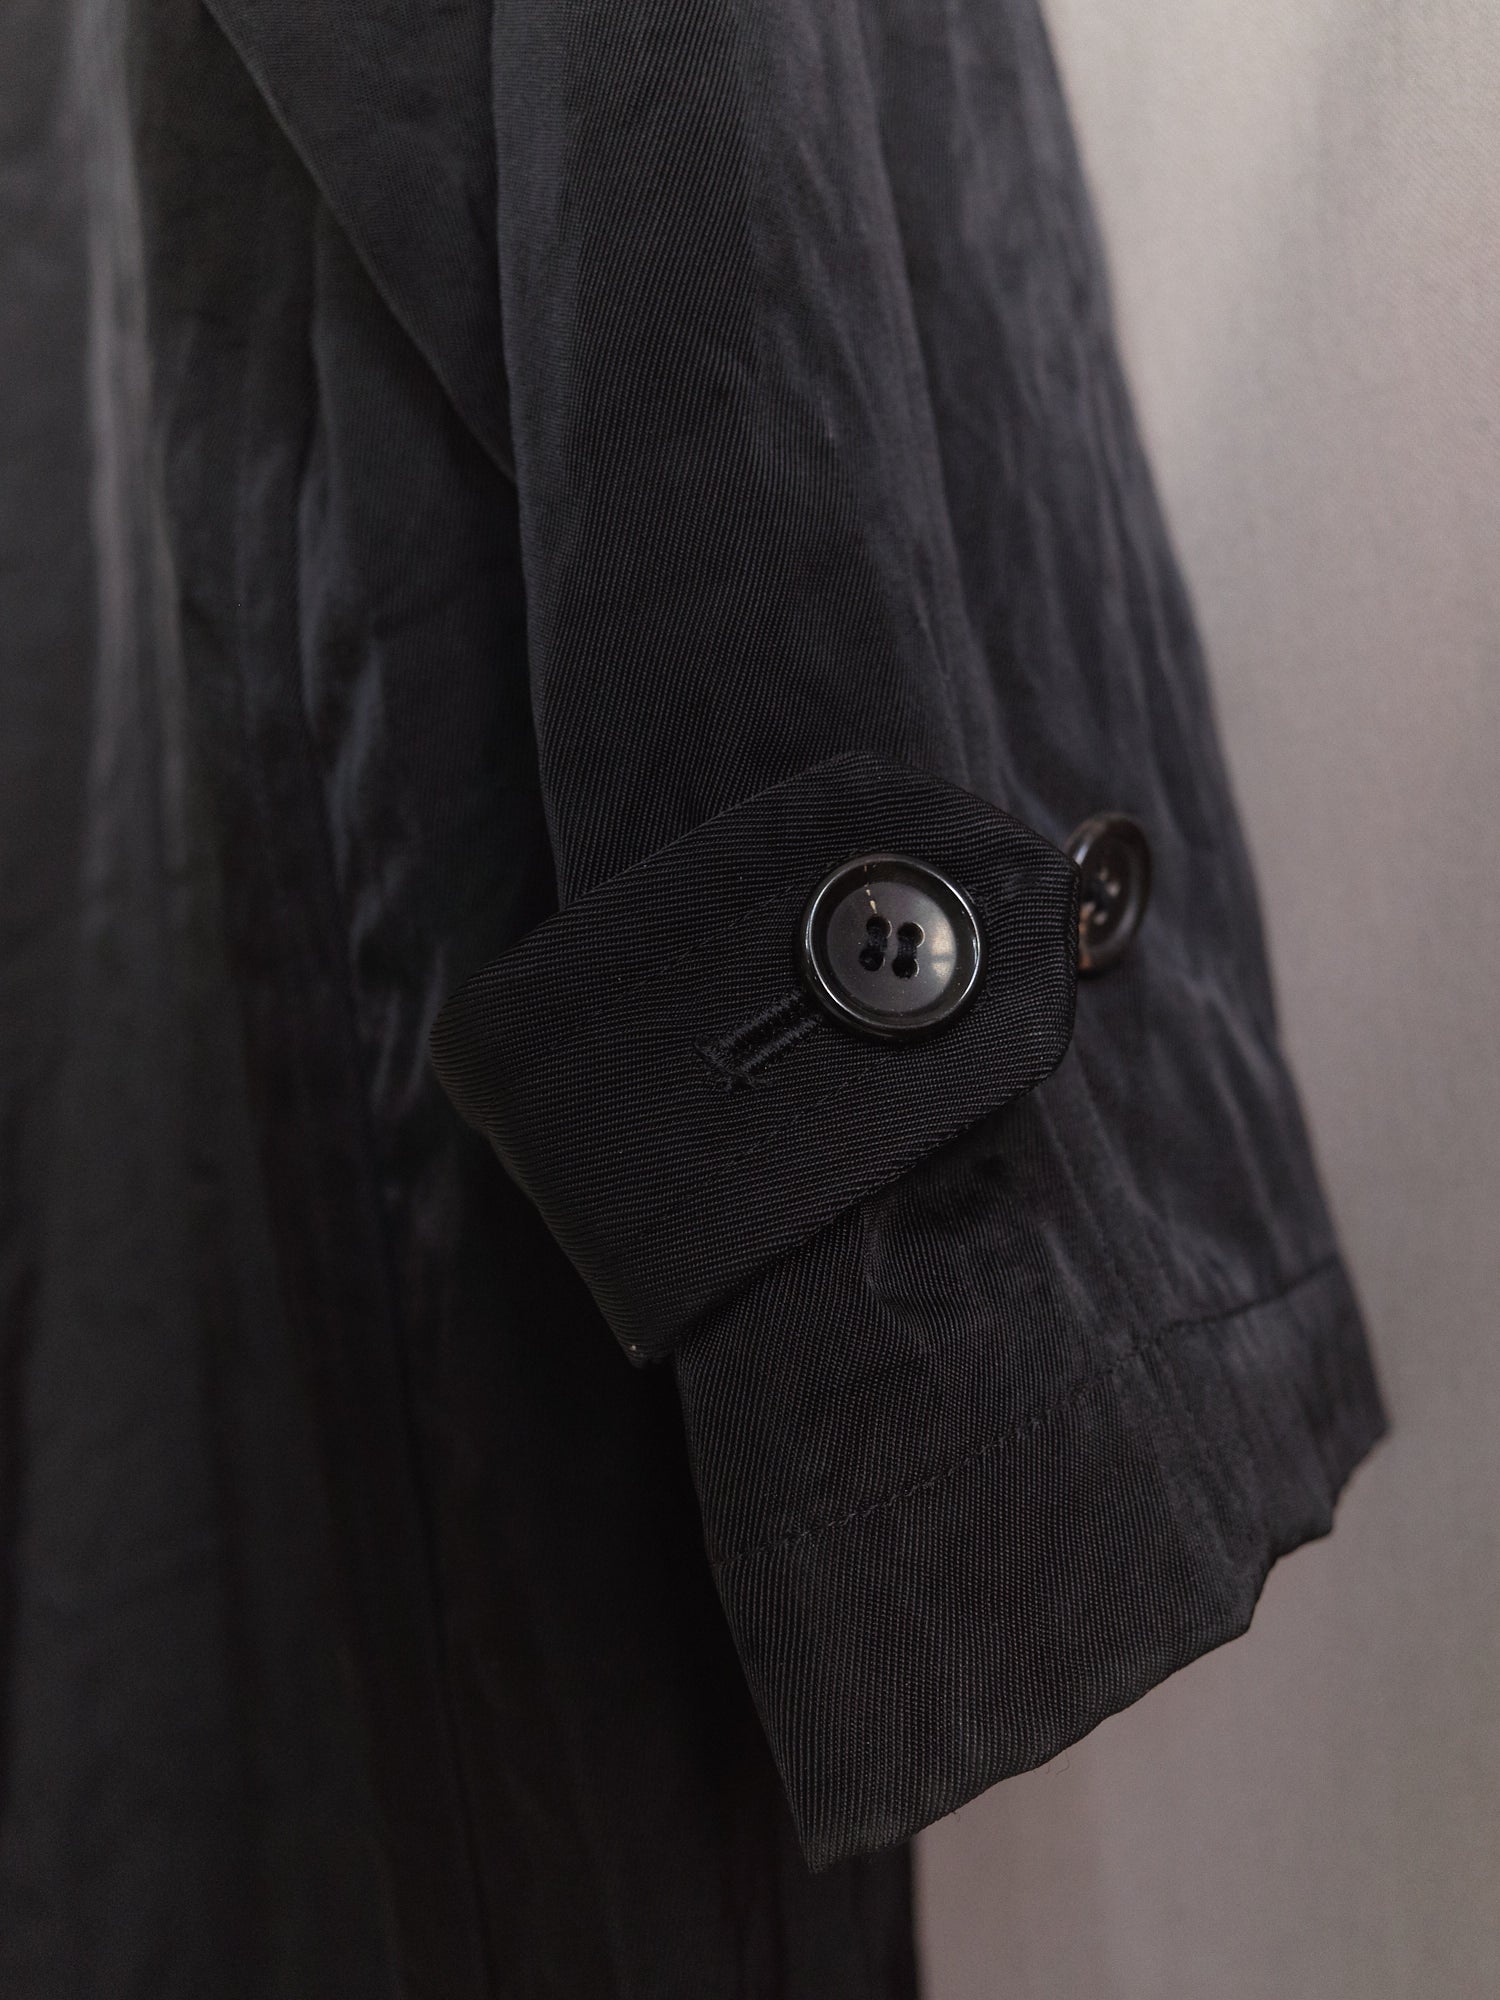 Comme des Garcons Homme AW1993 black creased nylon mackintosh coat - mens M